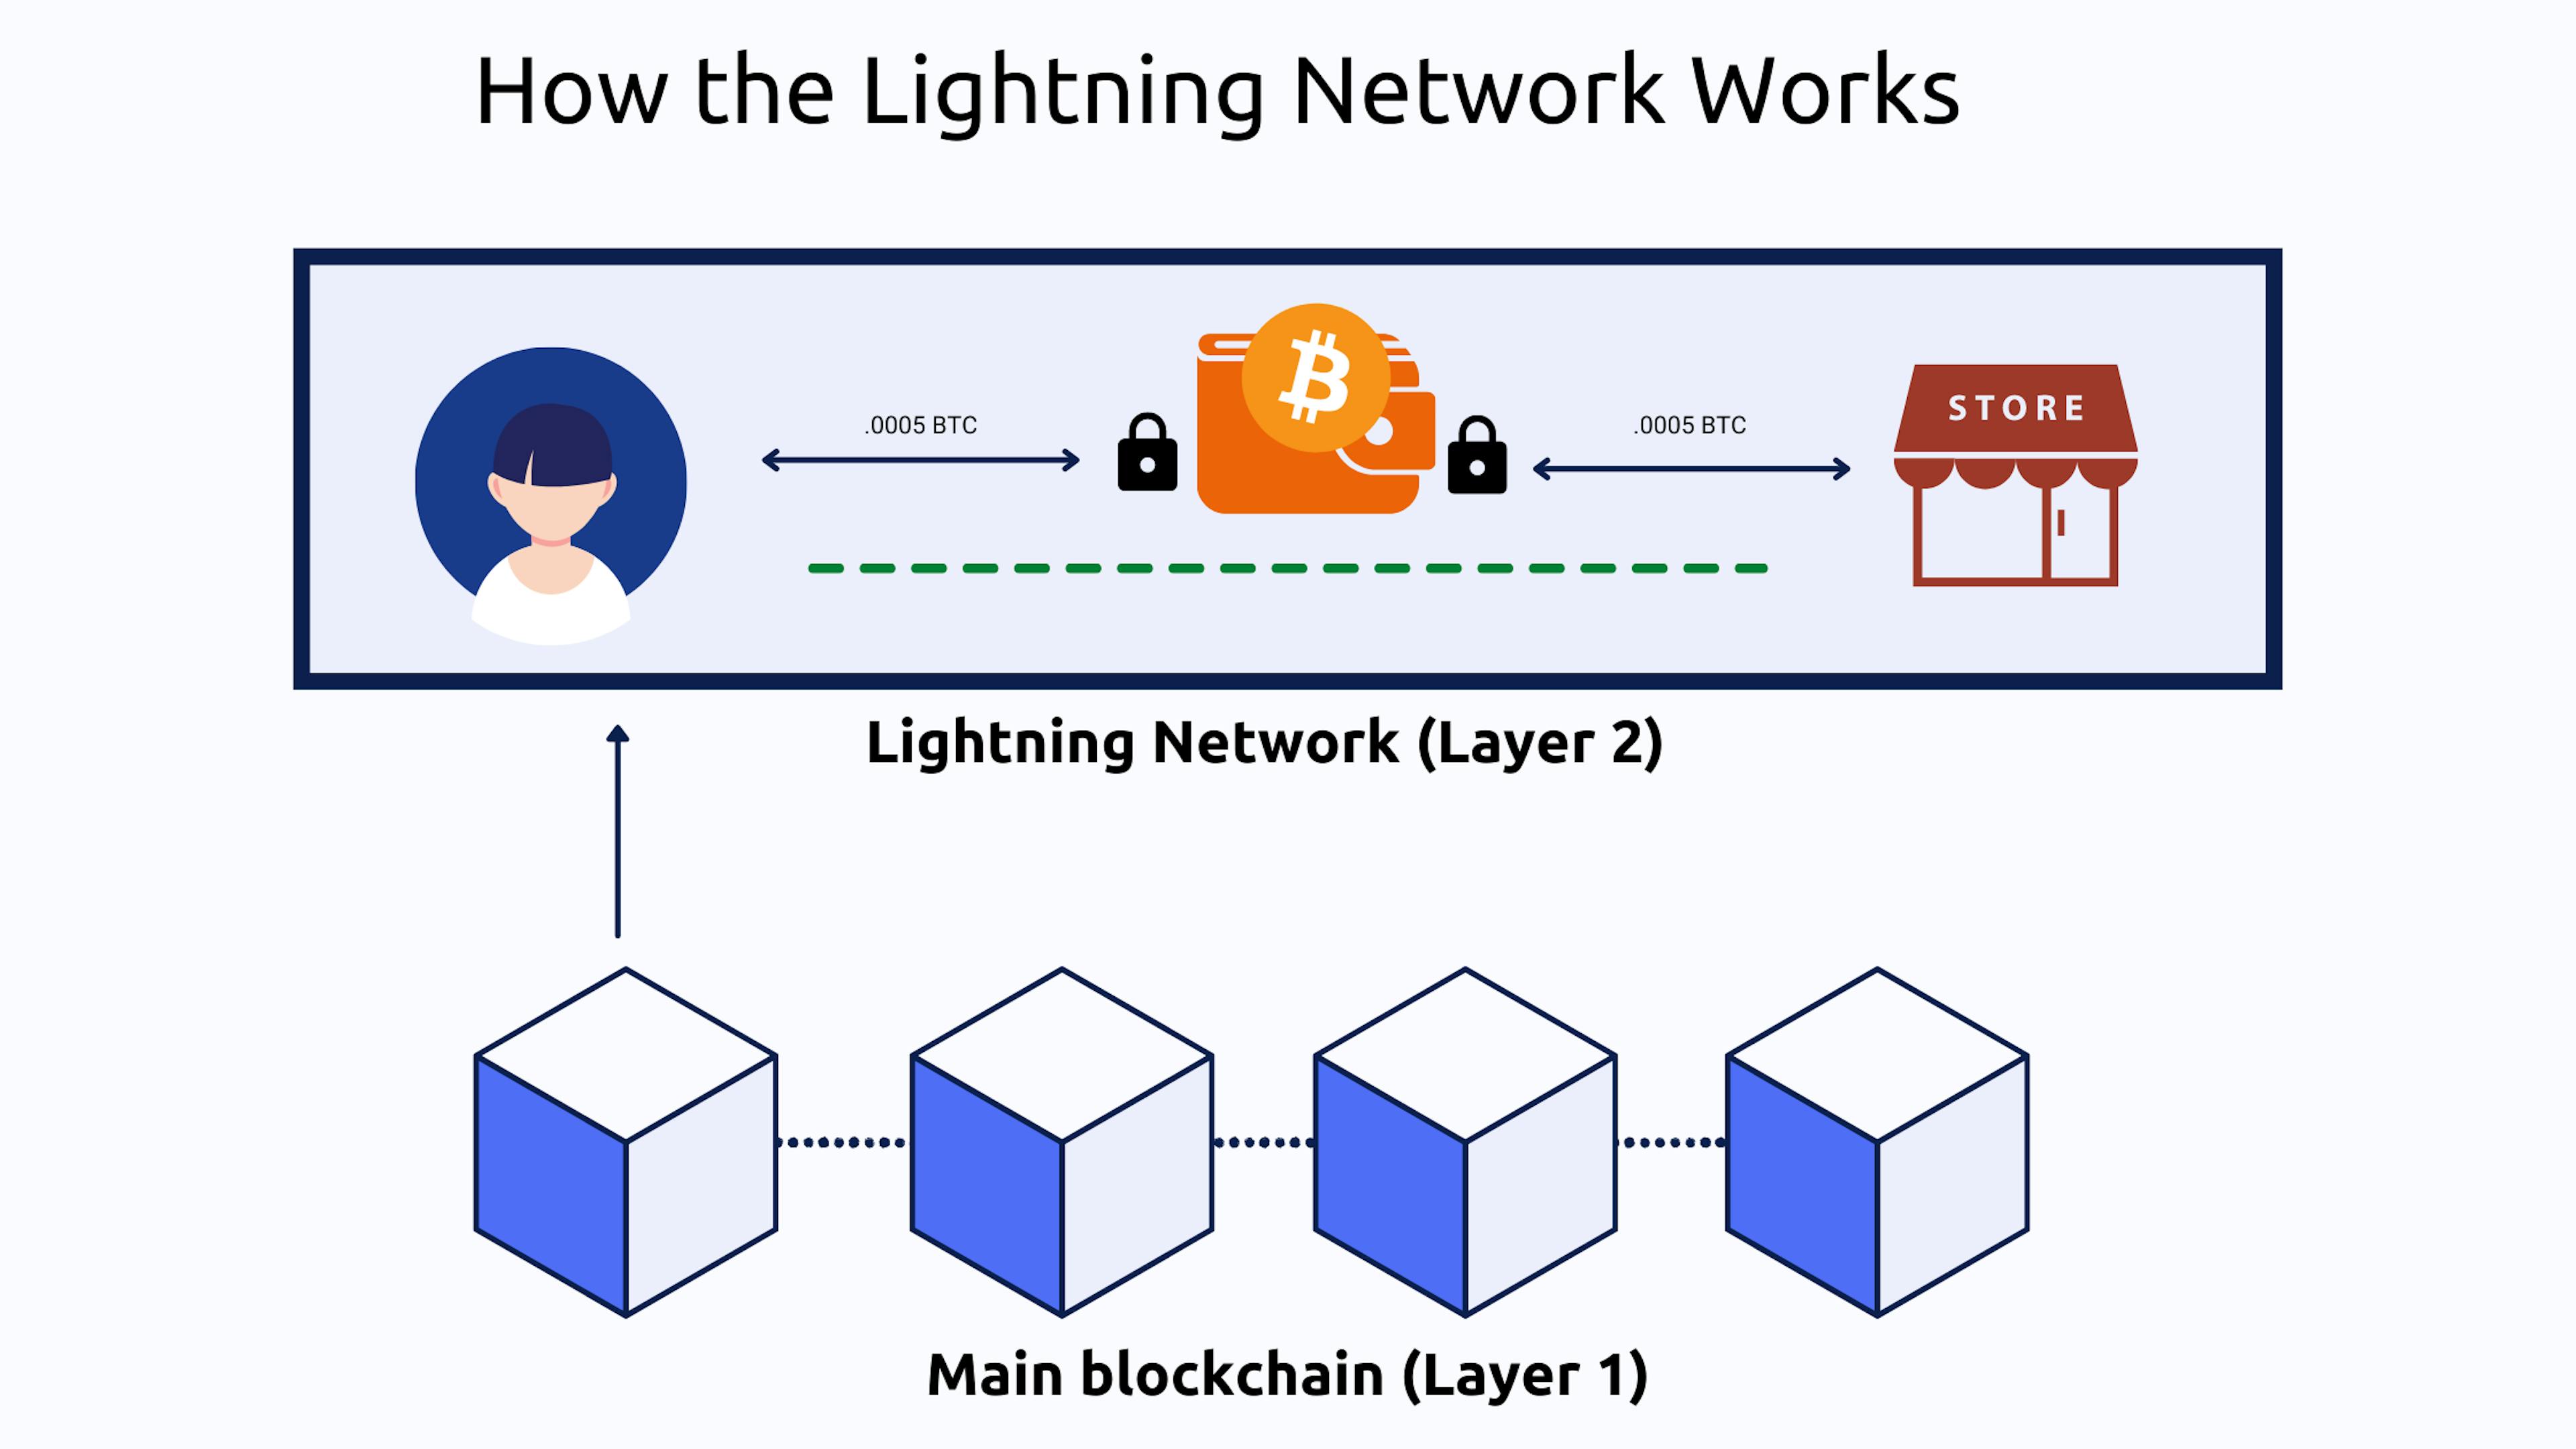 Fonte da imagem: https://bitpay.com/blog/what-is-the-lightning-network/